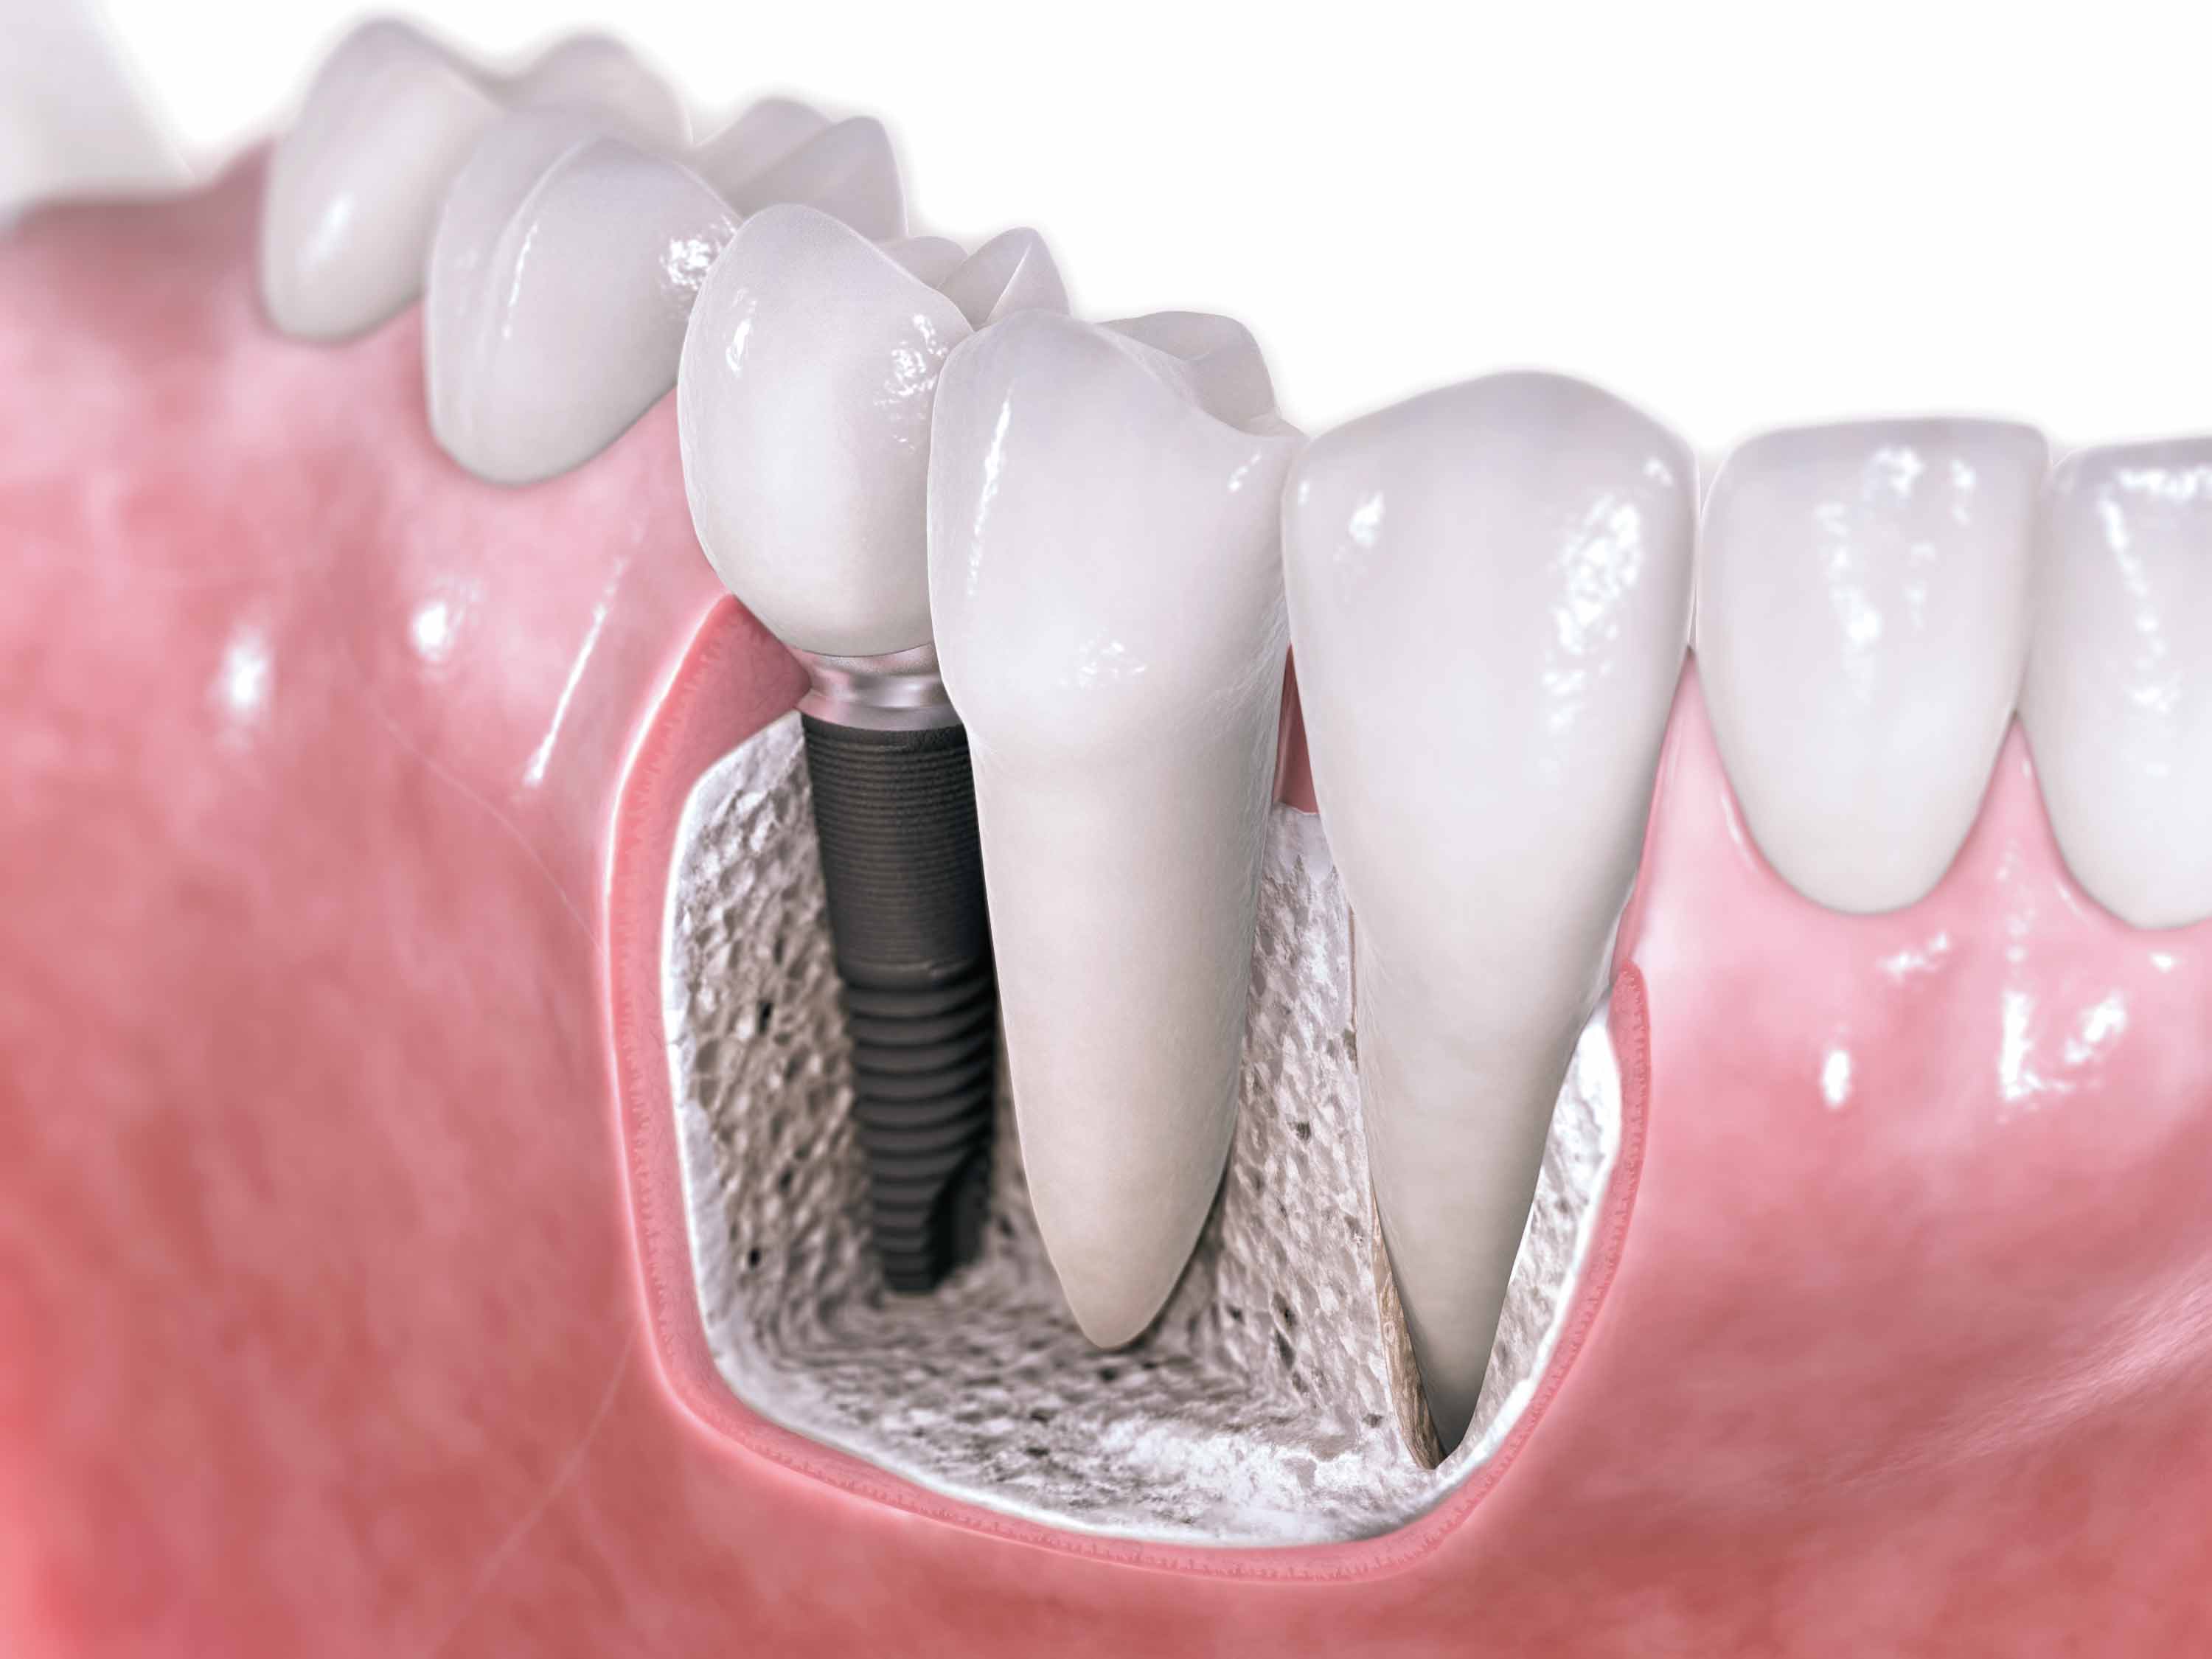 dental implants1